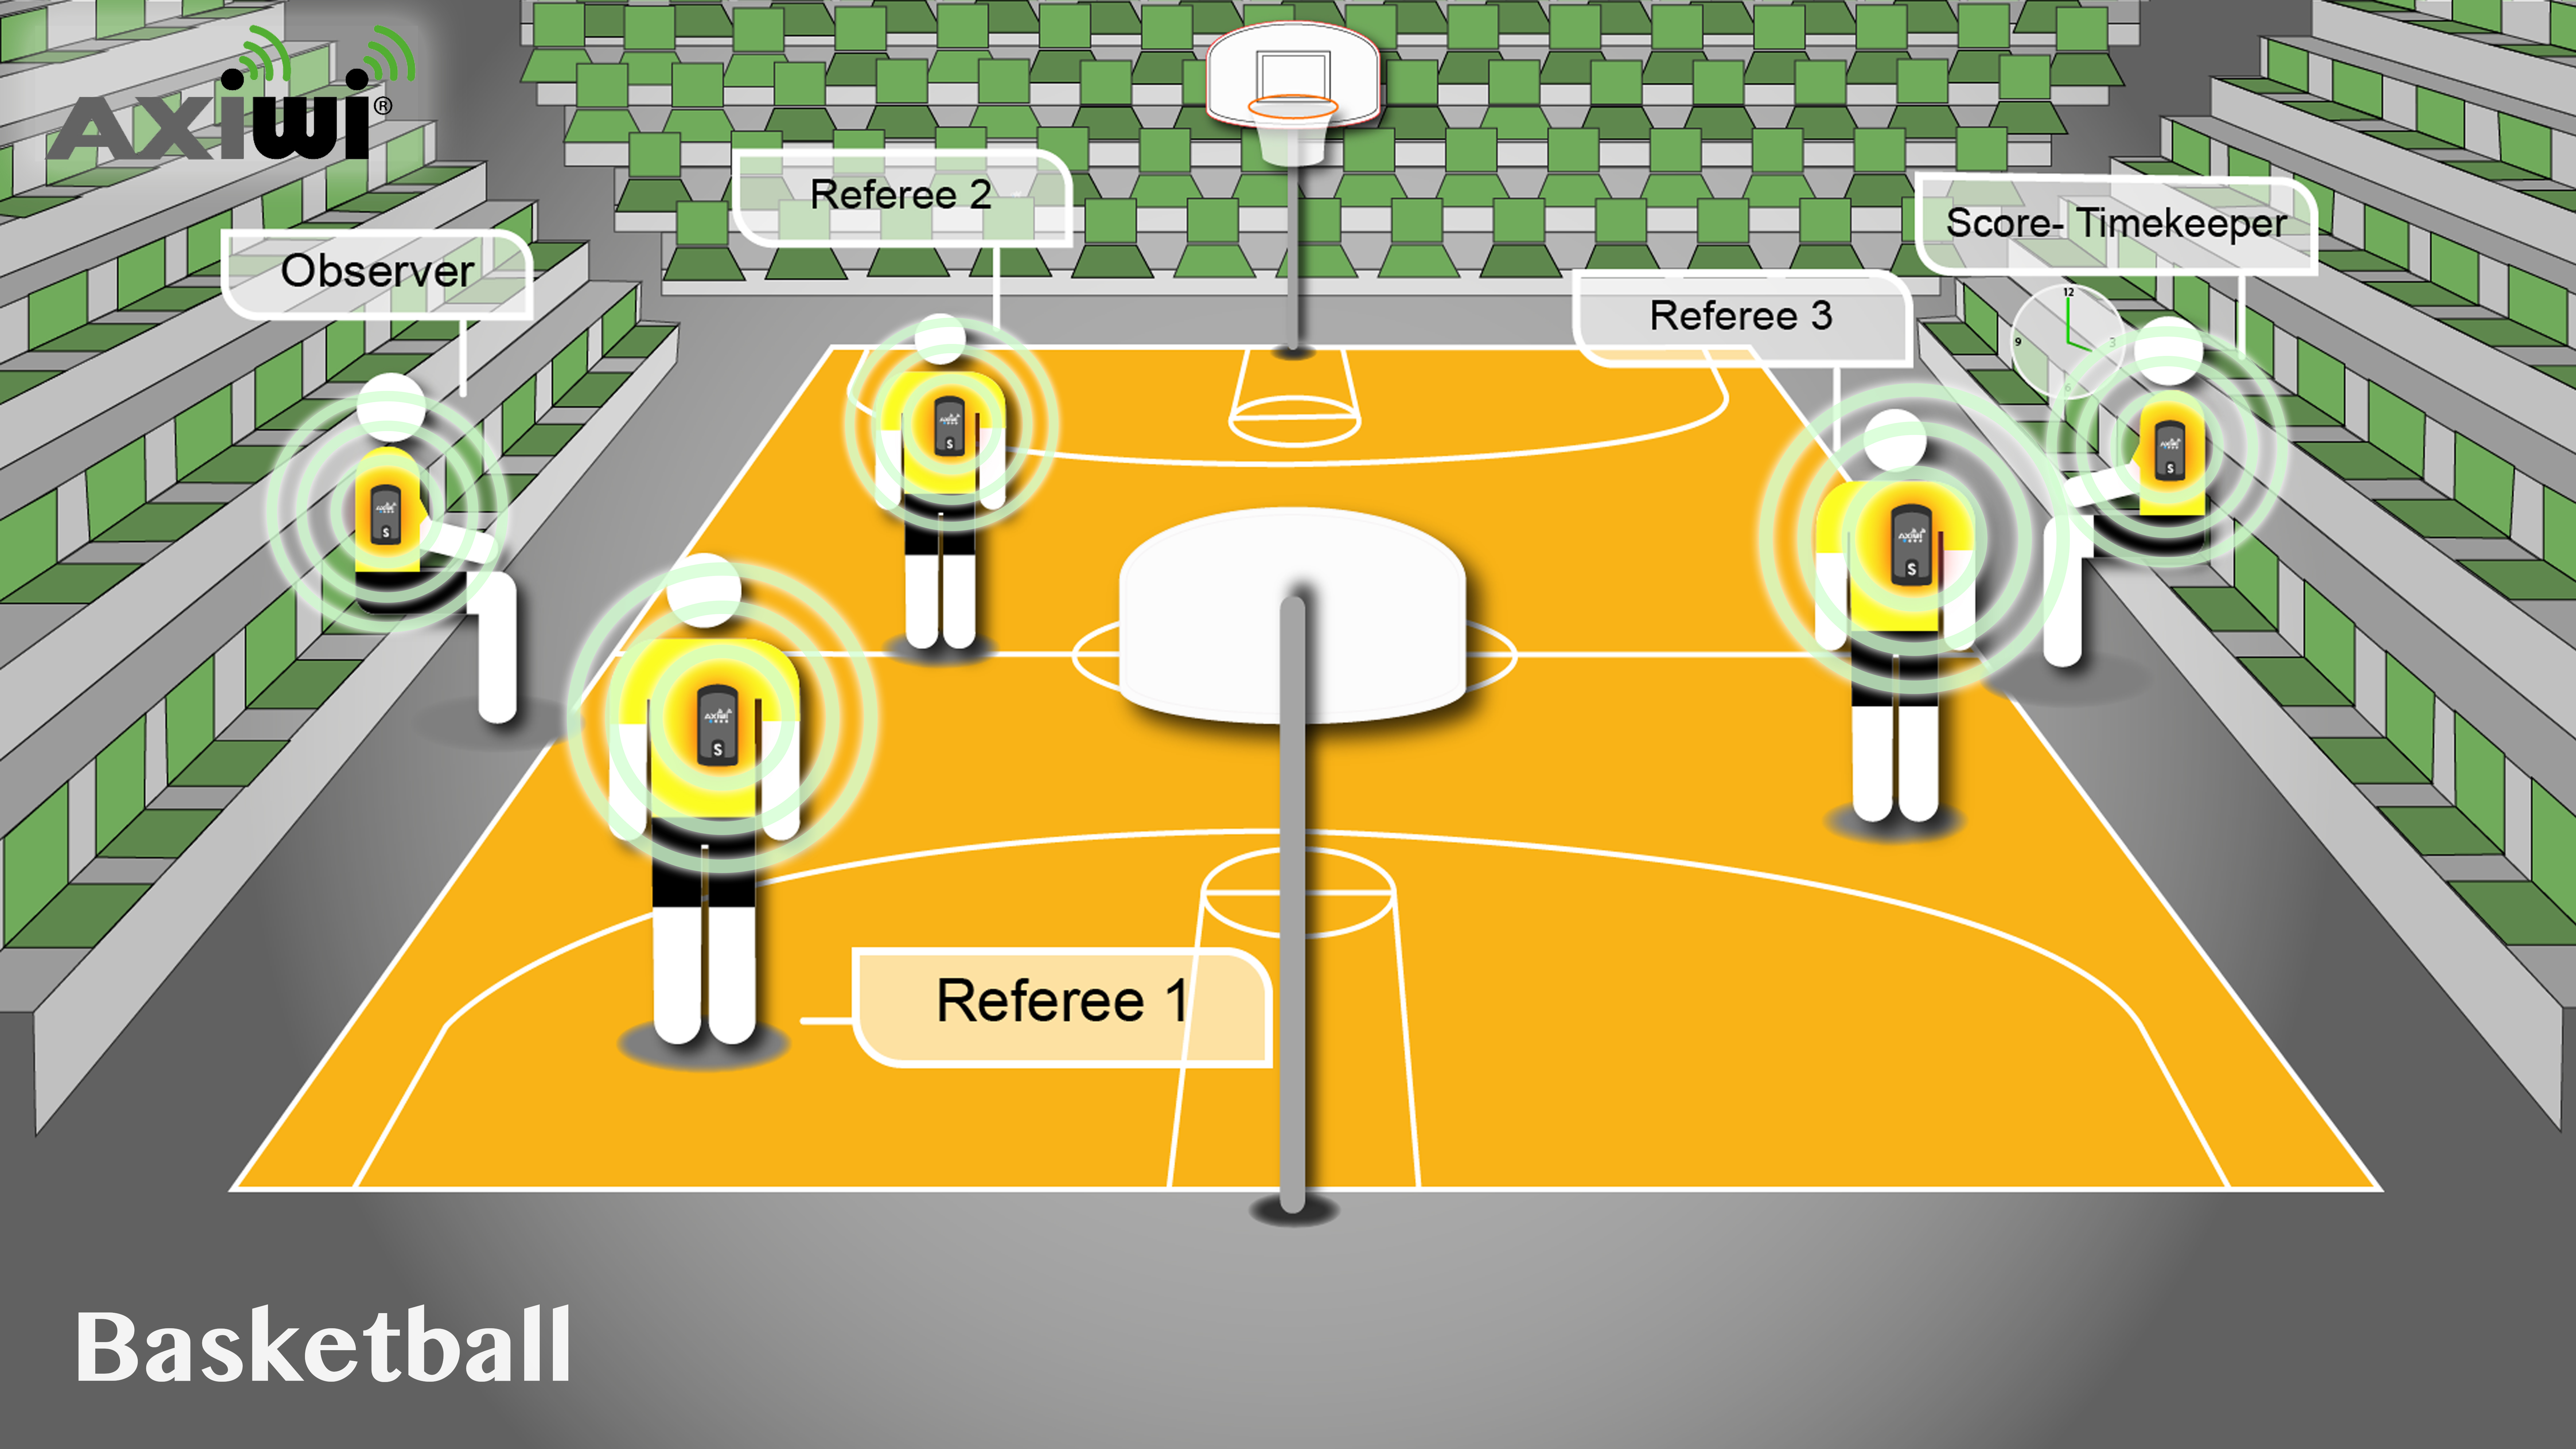 /axiwi-communication-system-referee-basketball